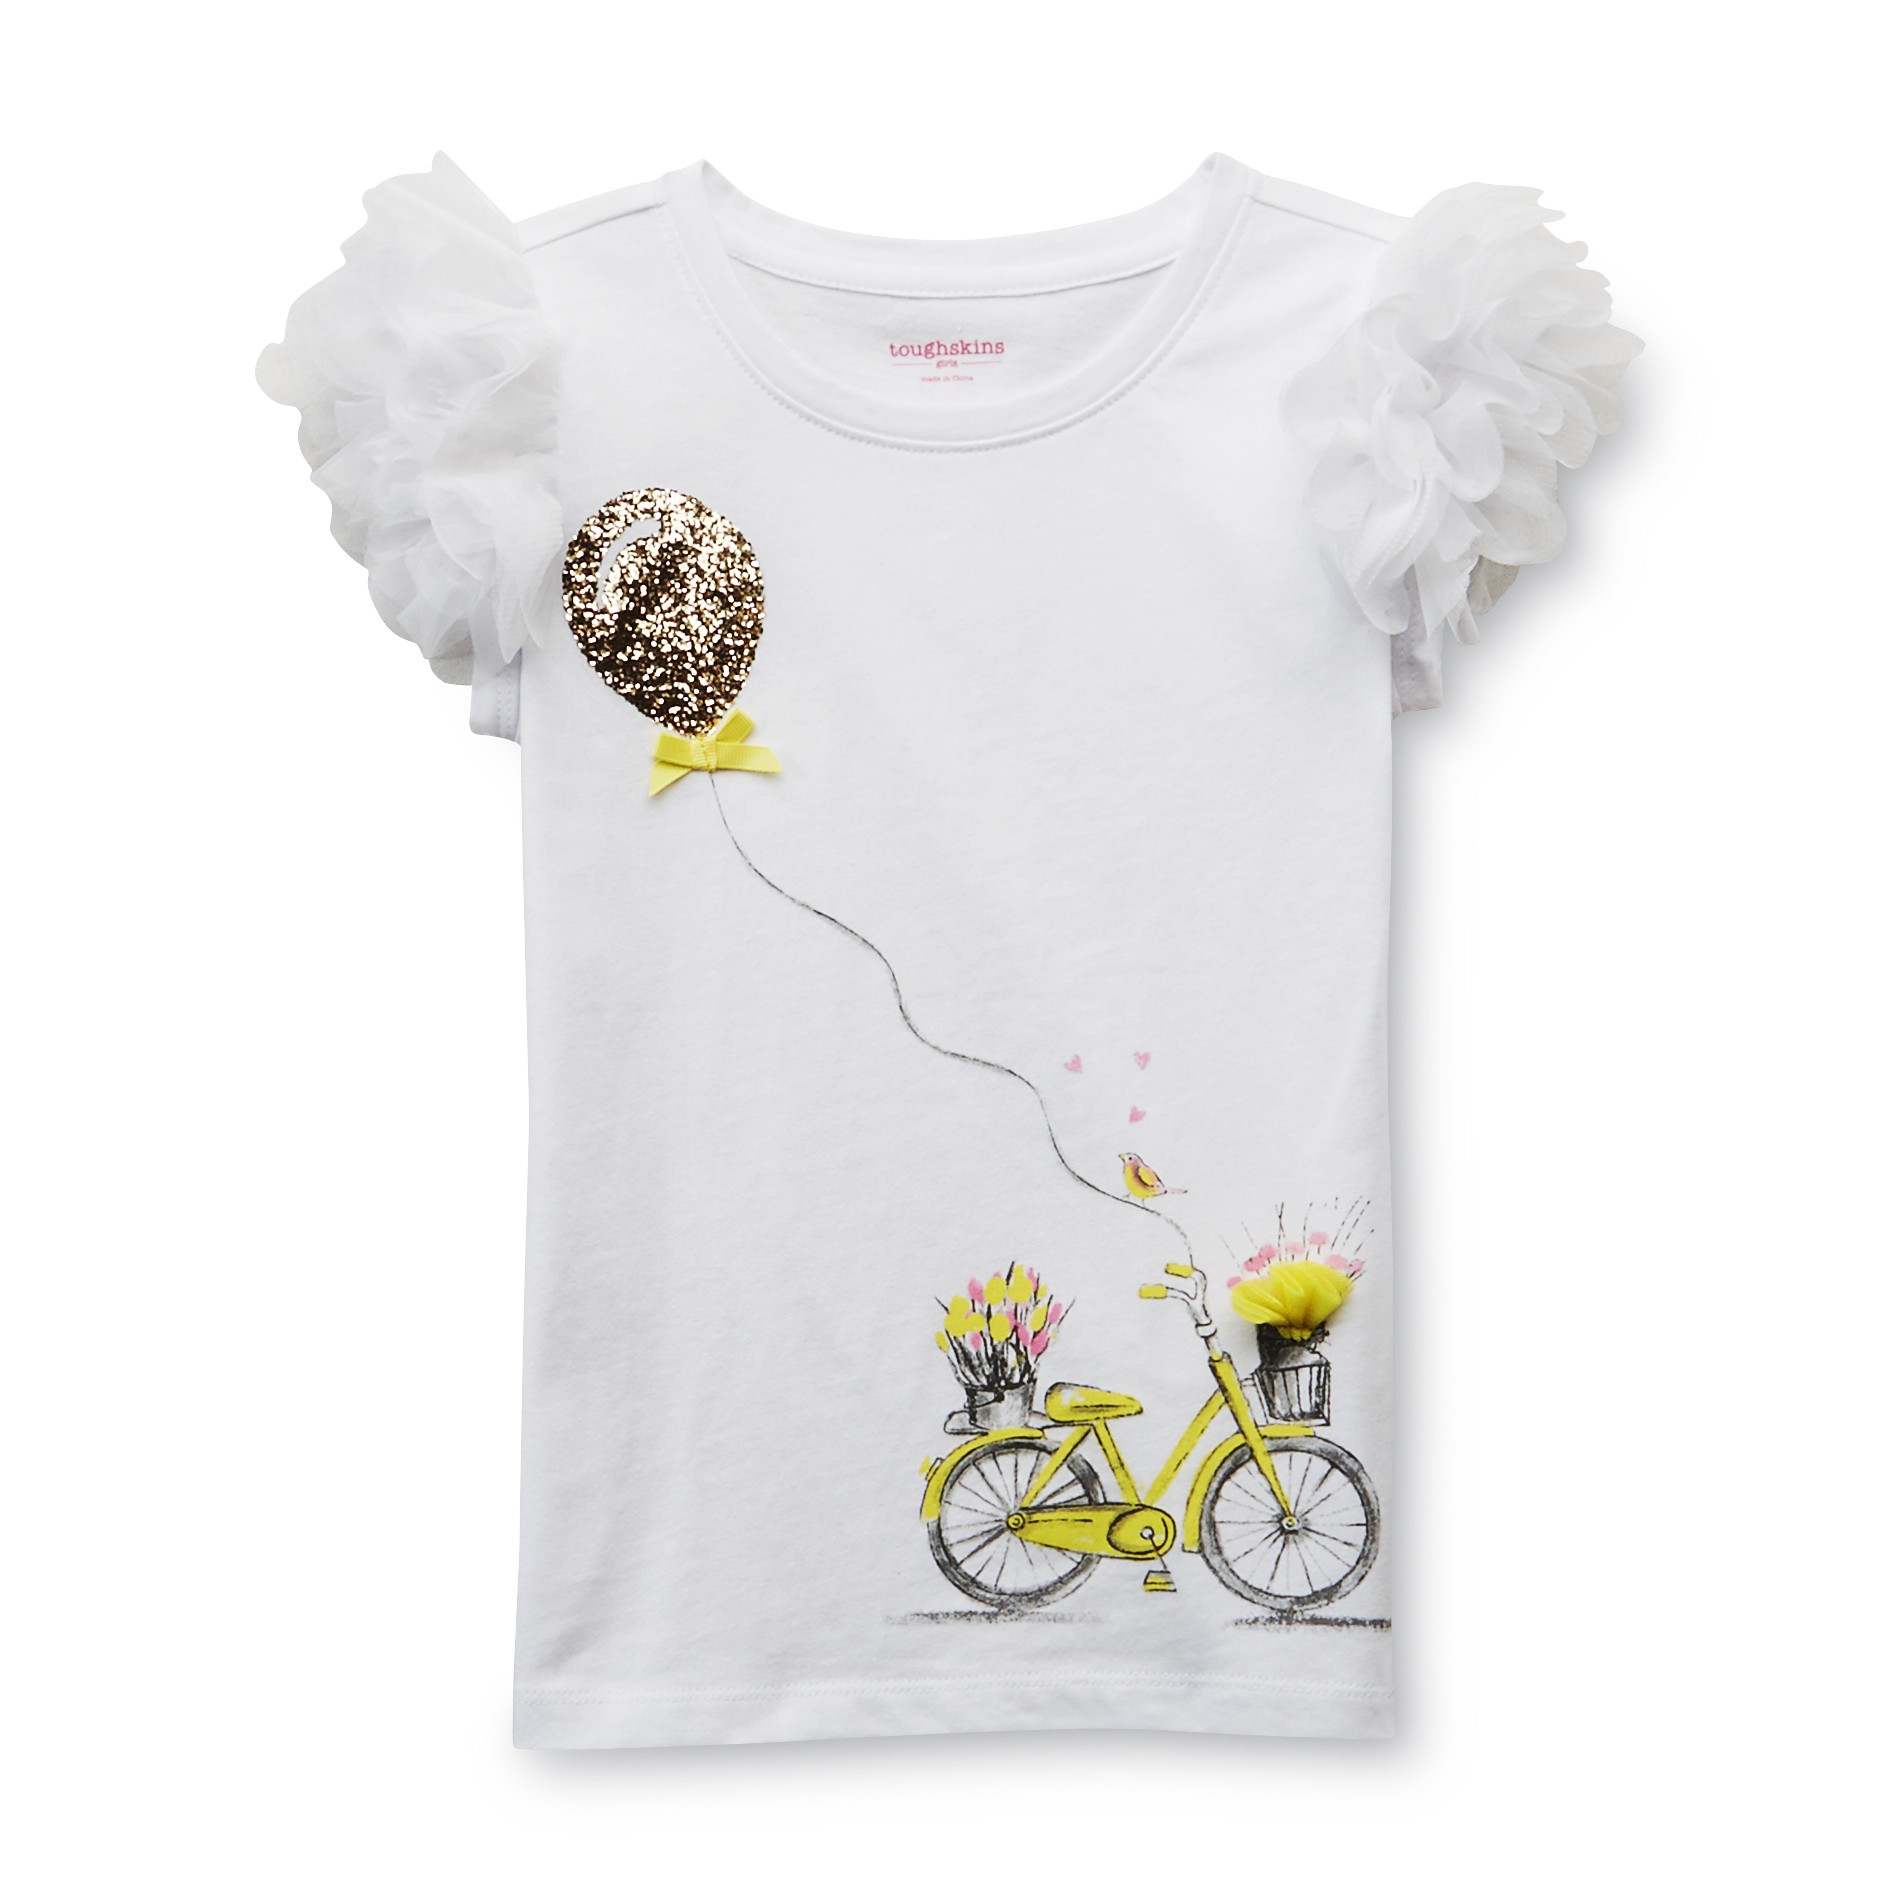 Toughskins Infant & Toddler Girl's Embellished Top - Bike & Balloon